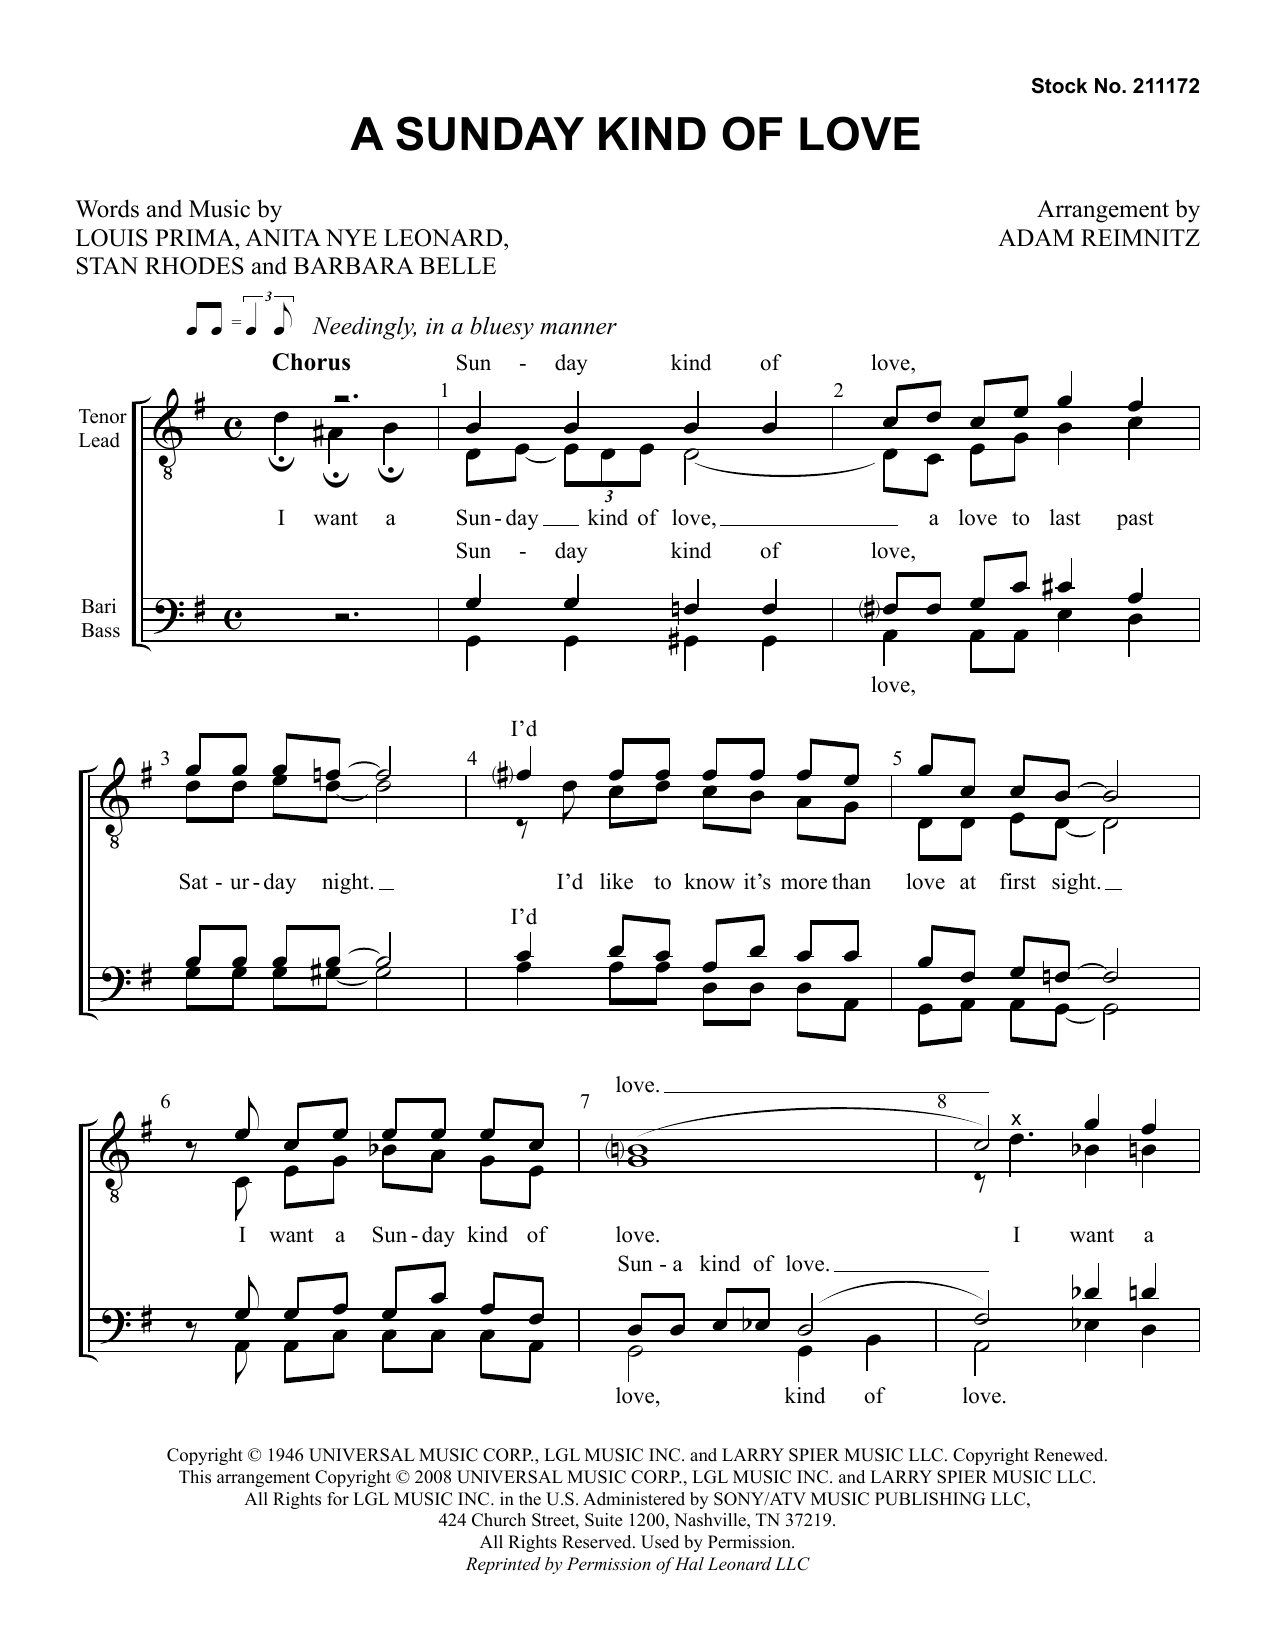 Etta James A Sunday Kind of Love (arr. Adam Reimnitz) Sheet Music Notes & Chords for TTBB Choir - Download or Print PDF